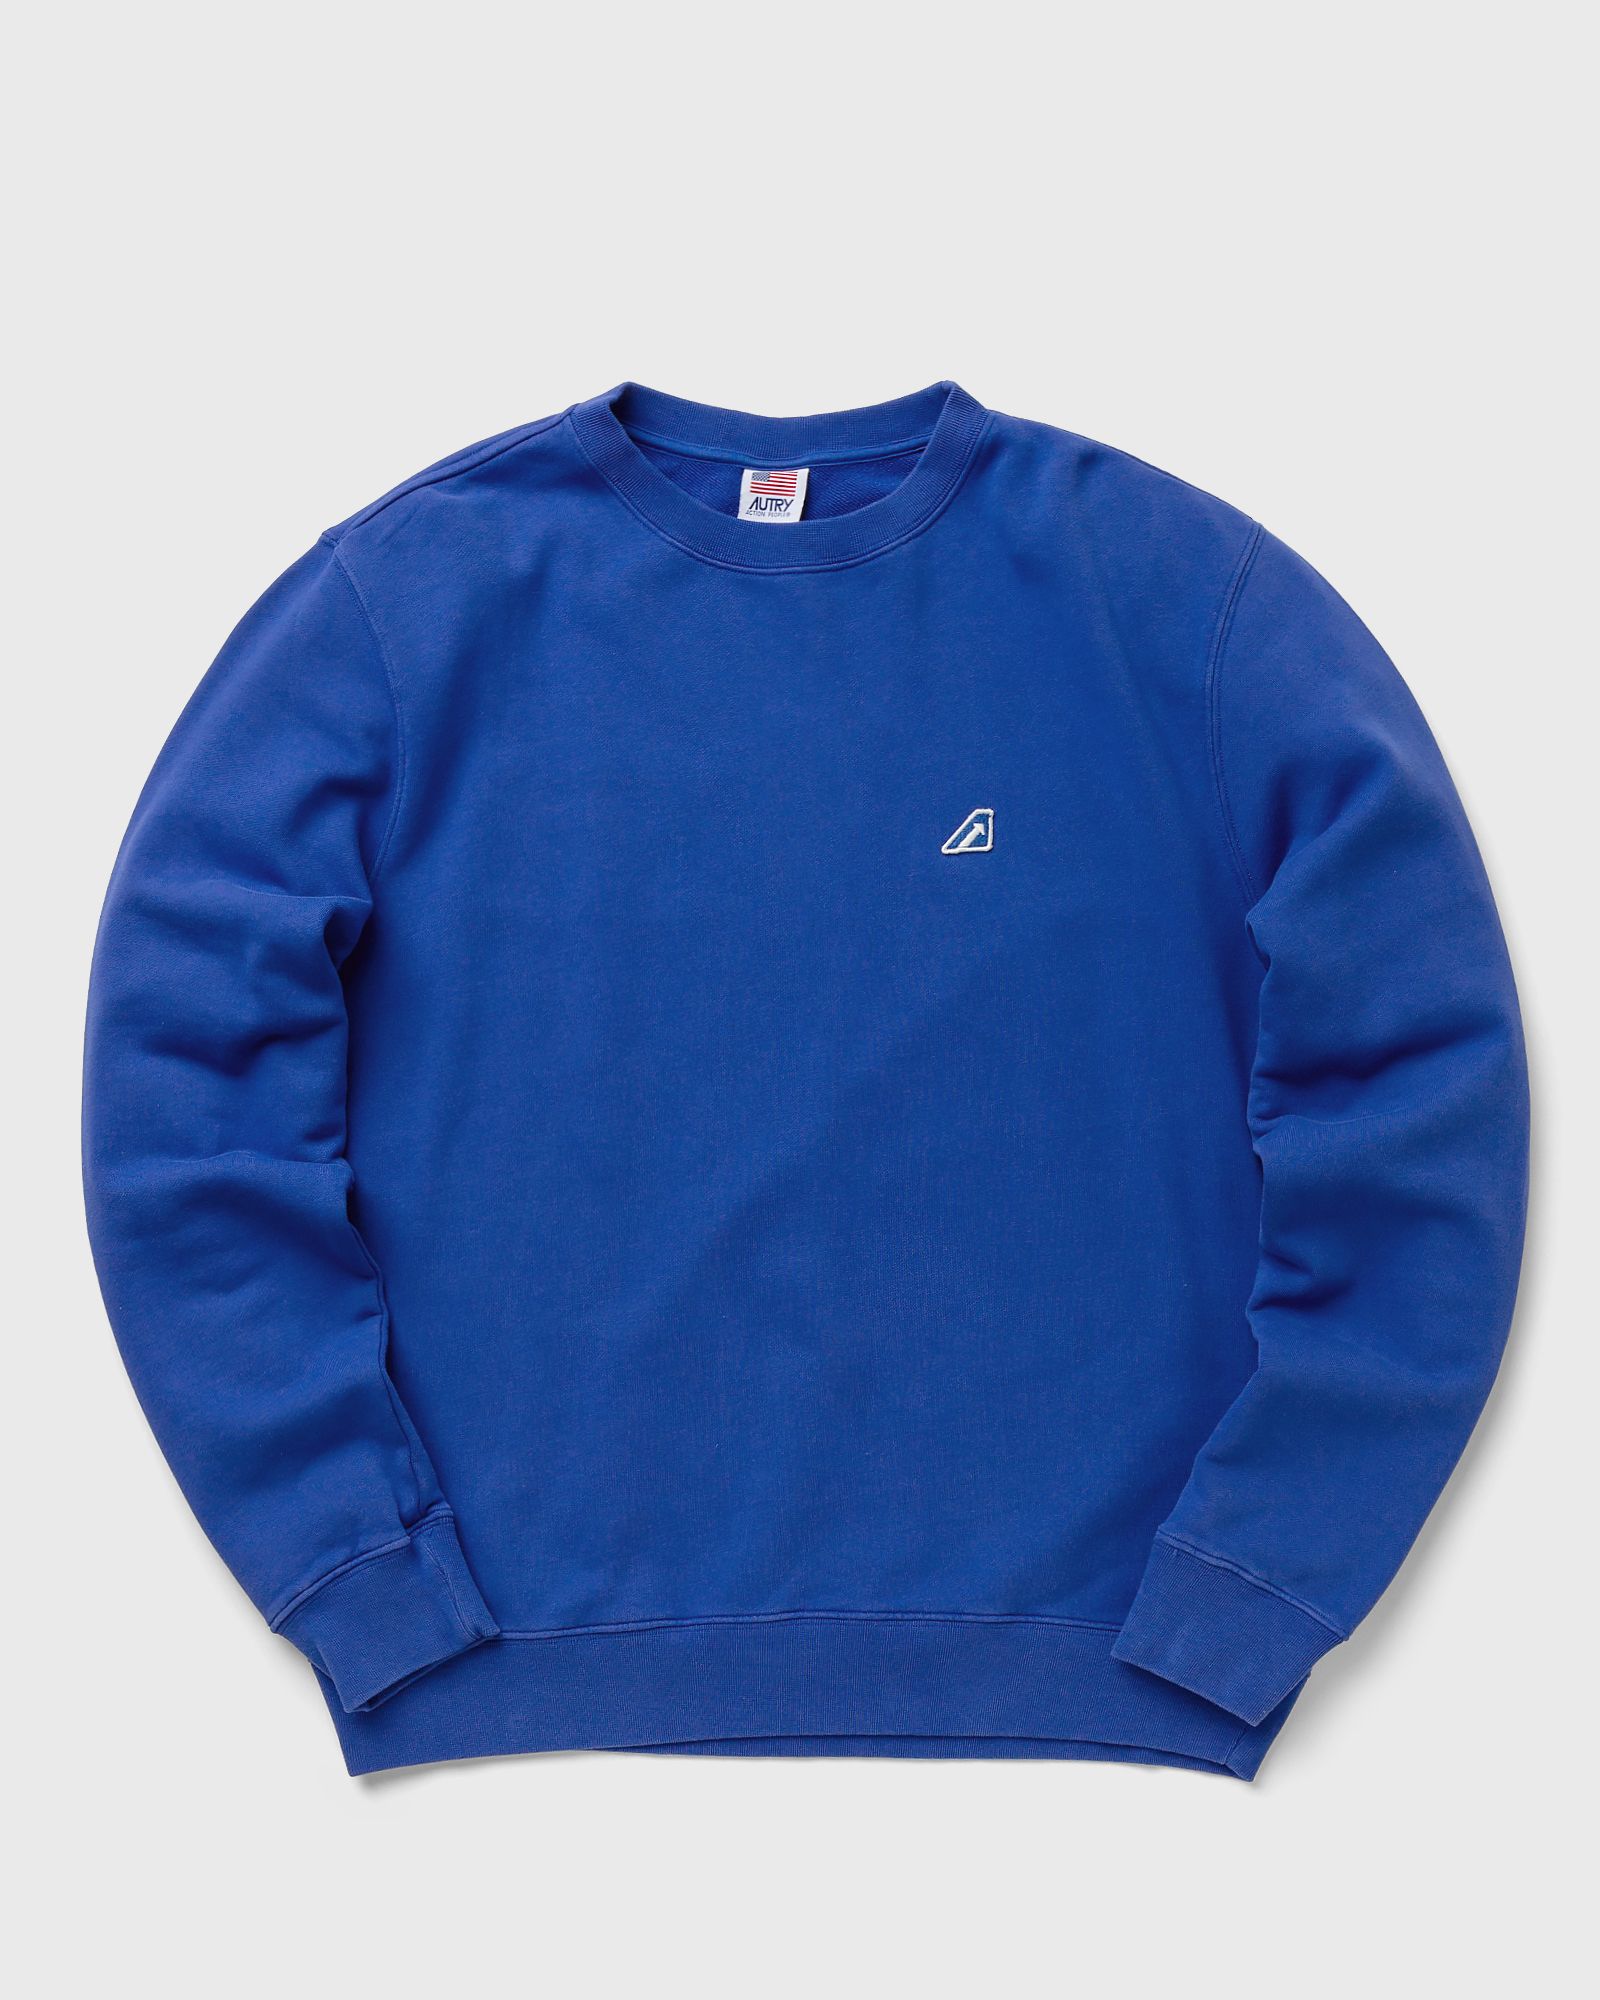 Autry Action Shoes - sweatshirt tennis man men sweatshirts blue in größe:l